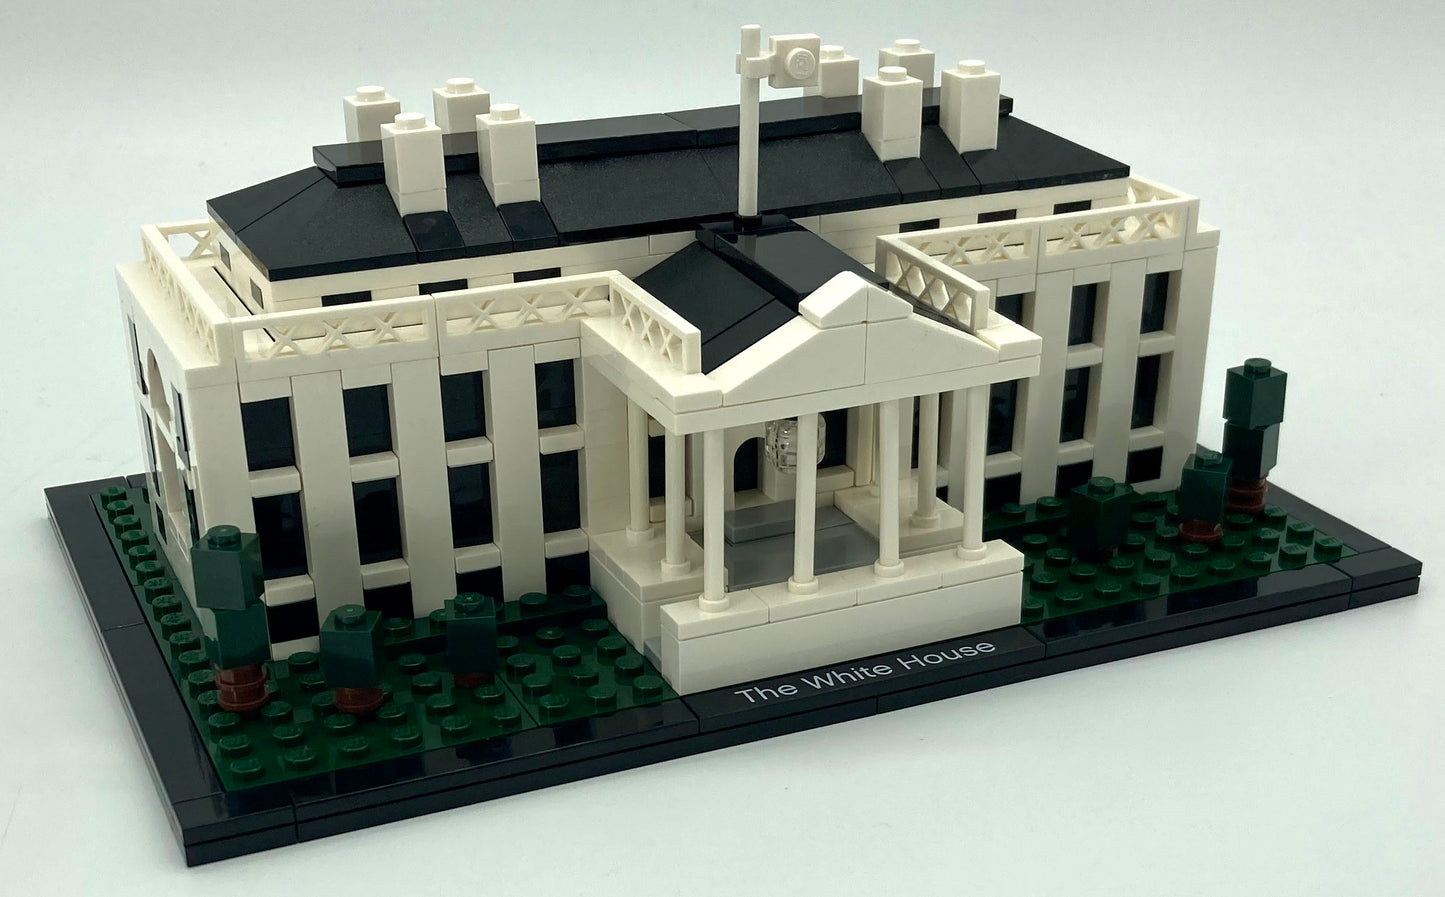 Used Set 21006 The White House (No Instruction Manual or Box)